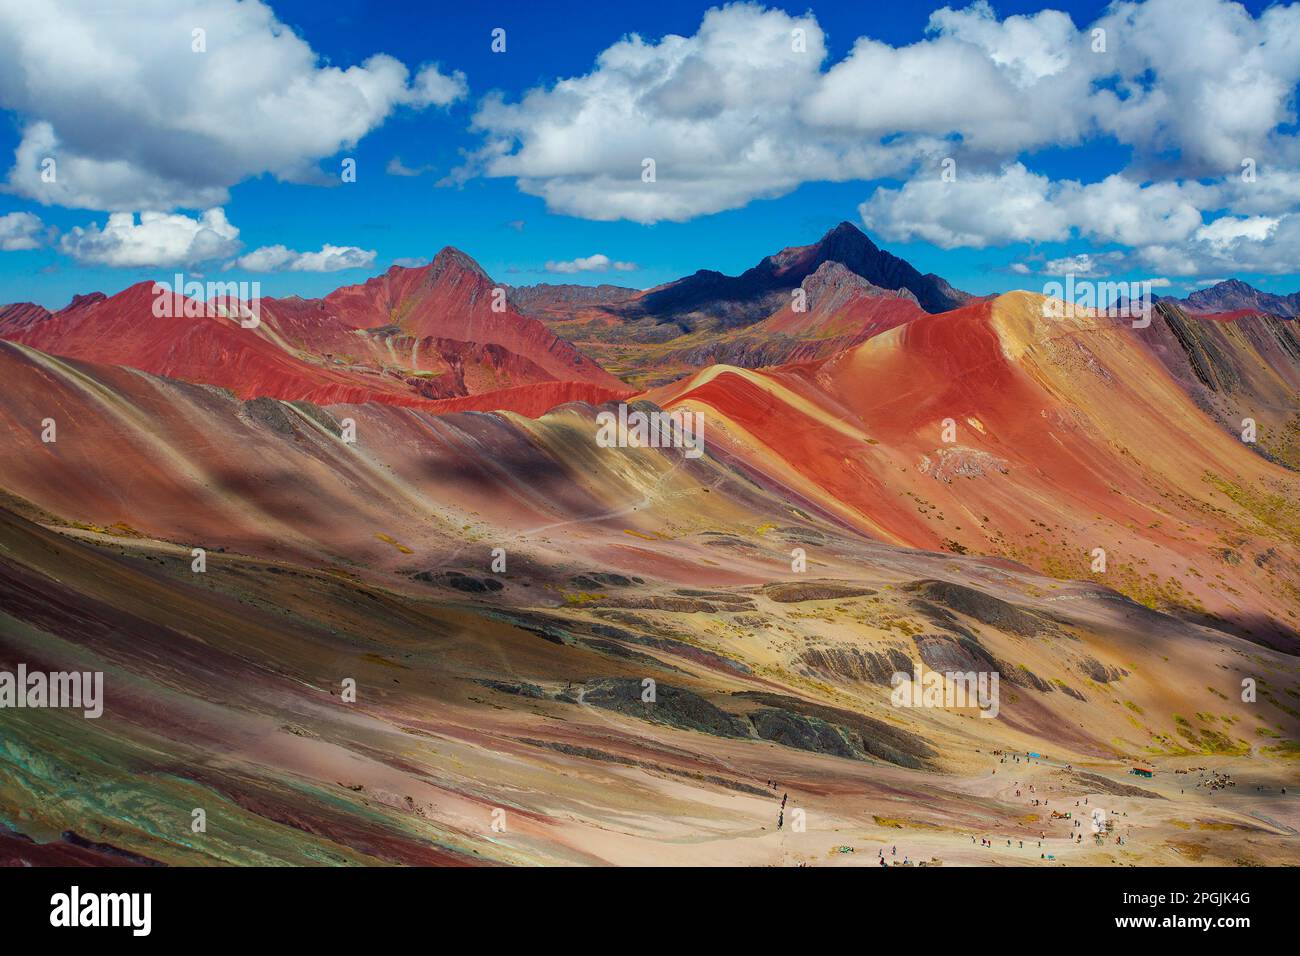 Hiking scene in Vinicunca, Cusco Region, Peru. Rainbow Mountain (Montana de Siete Colores). Stock Photo